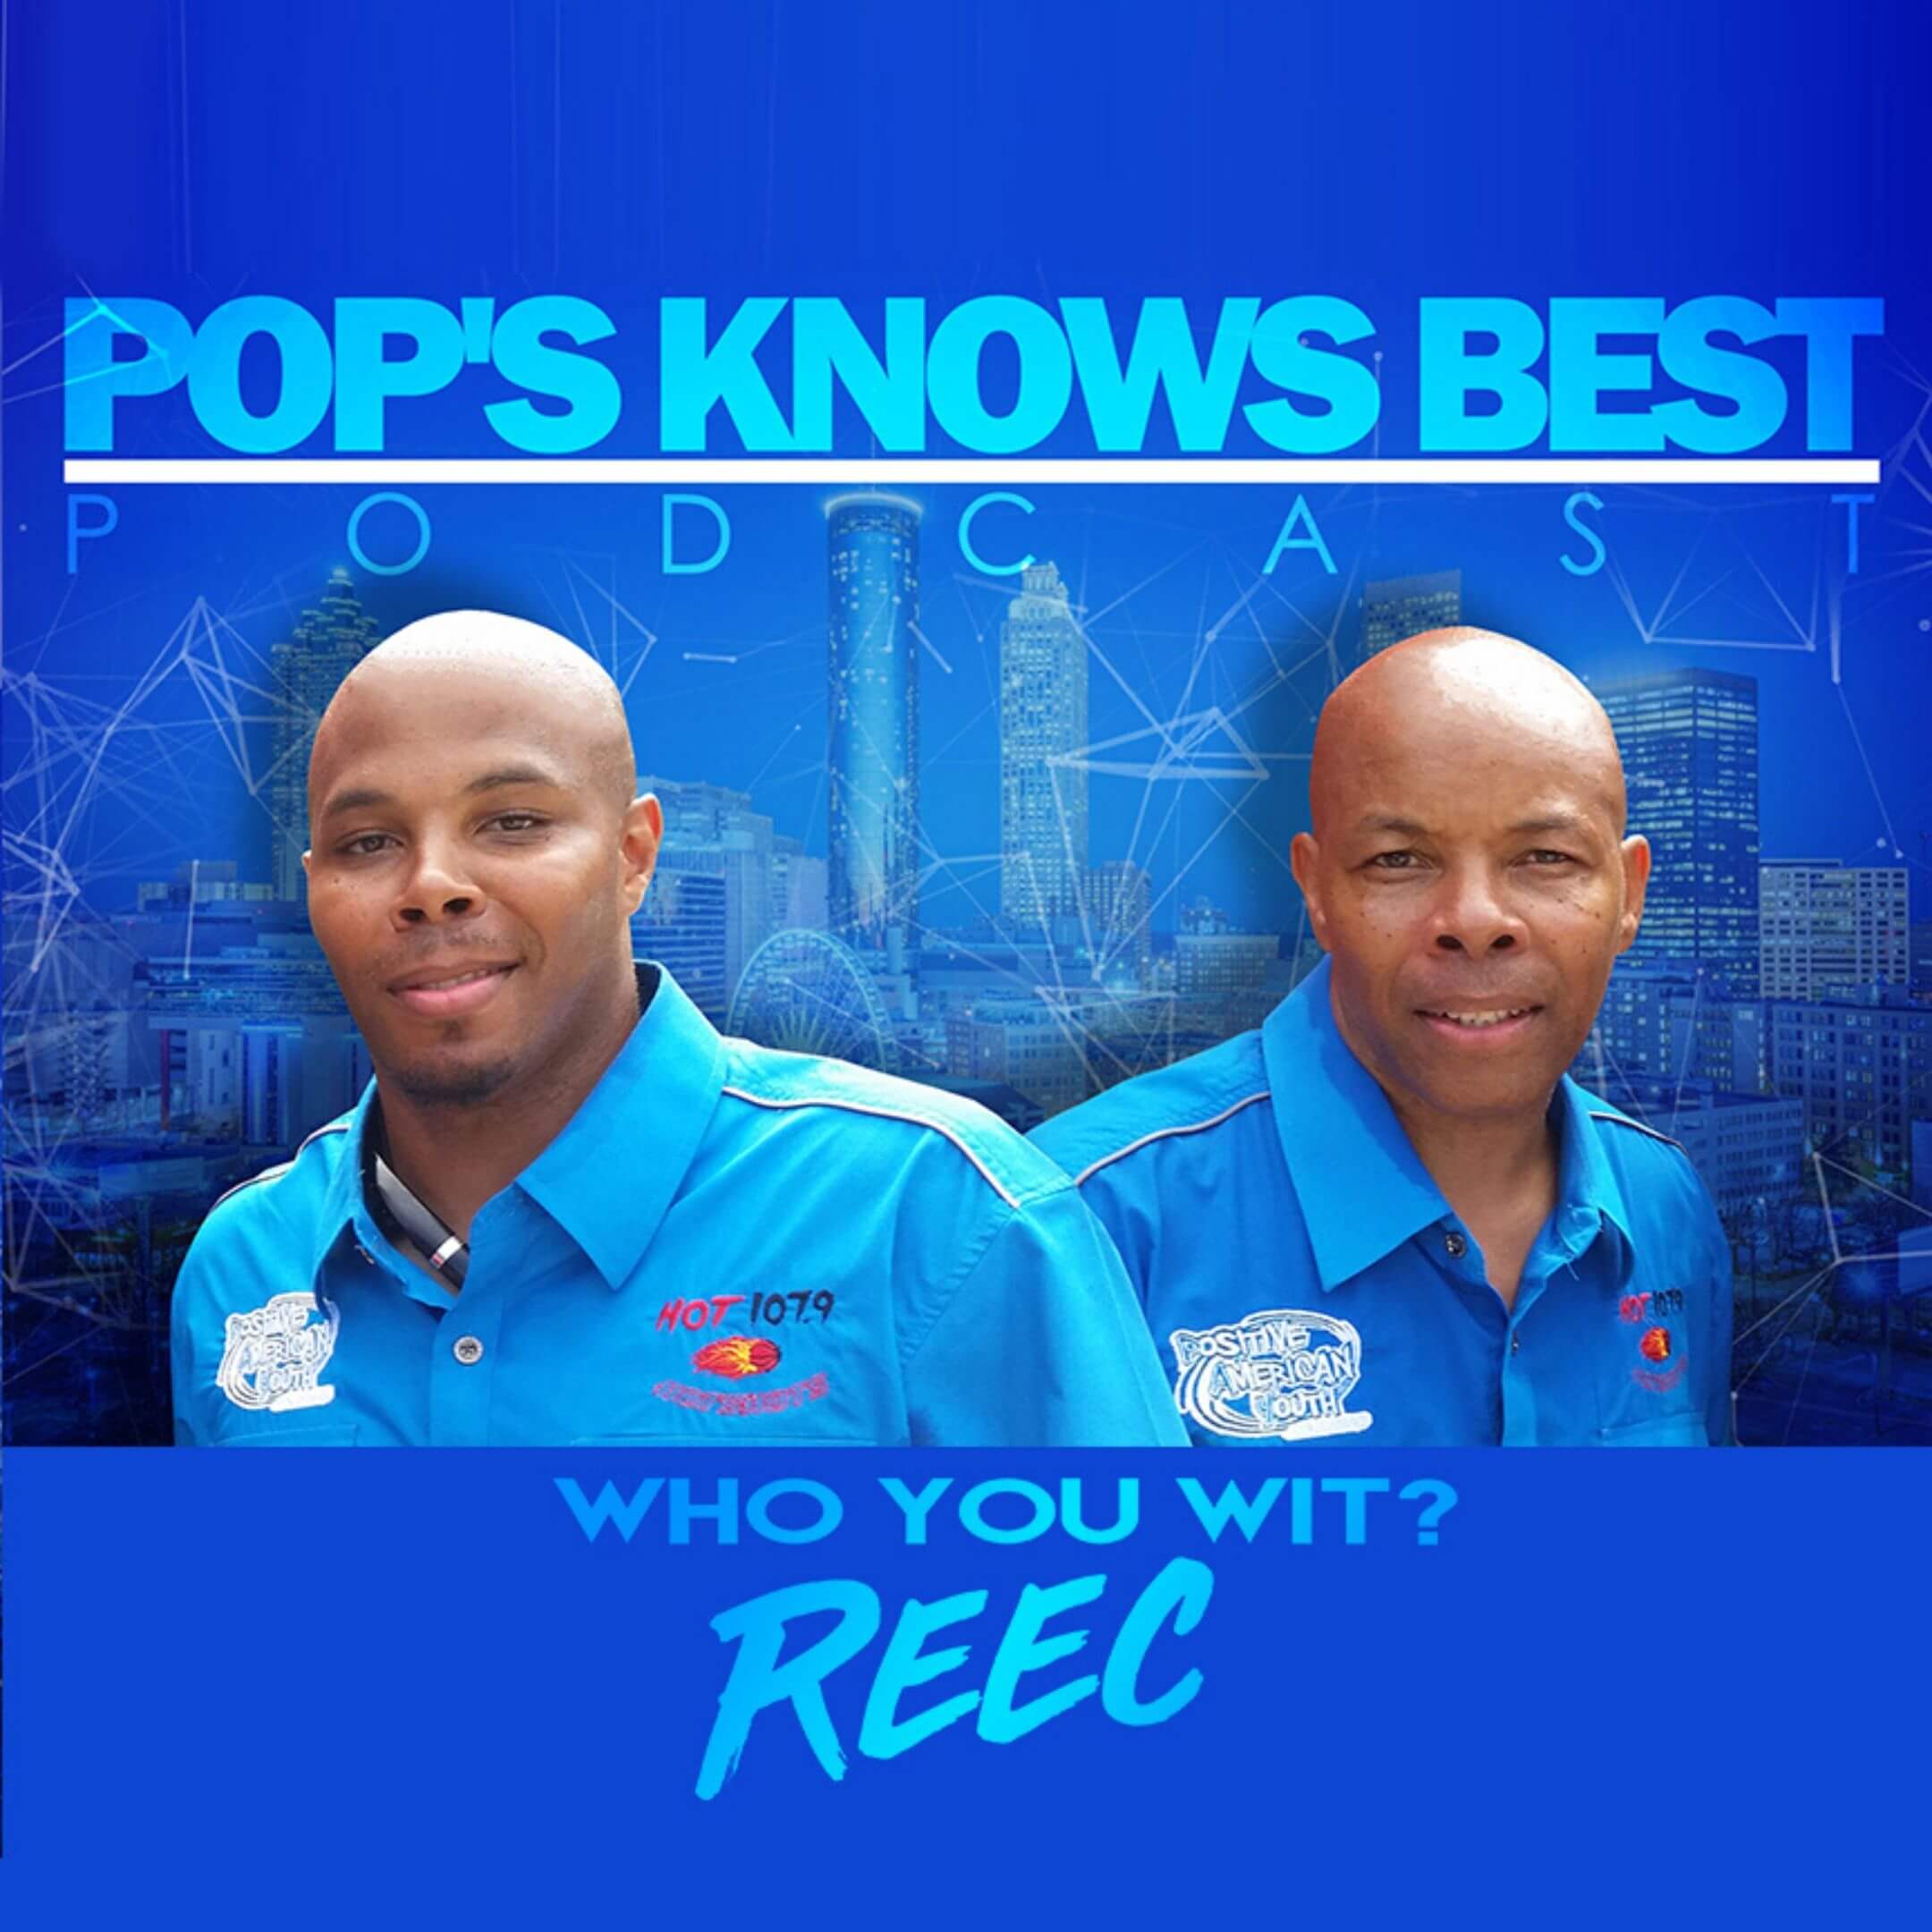 Reec Pops Knows Best web graphic